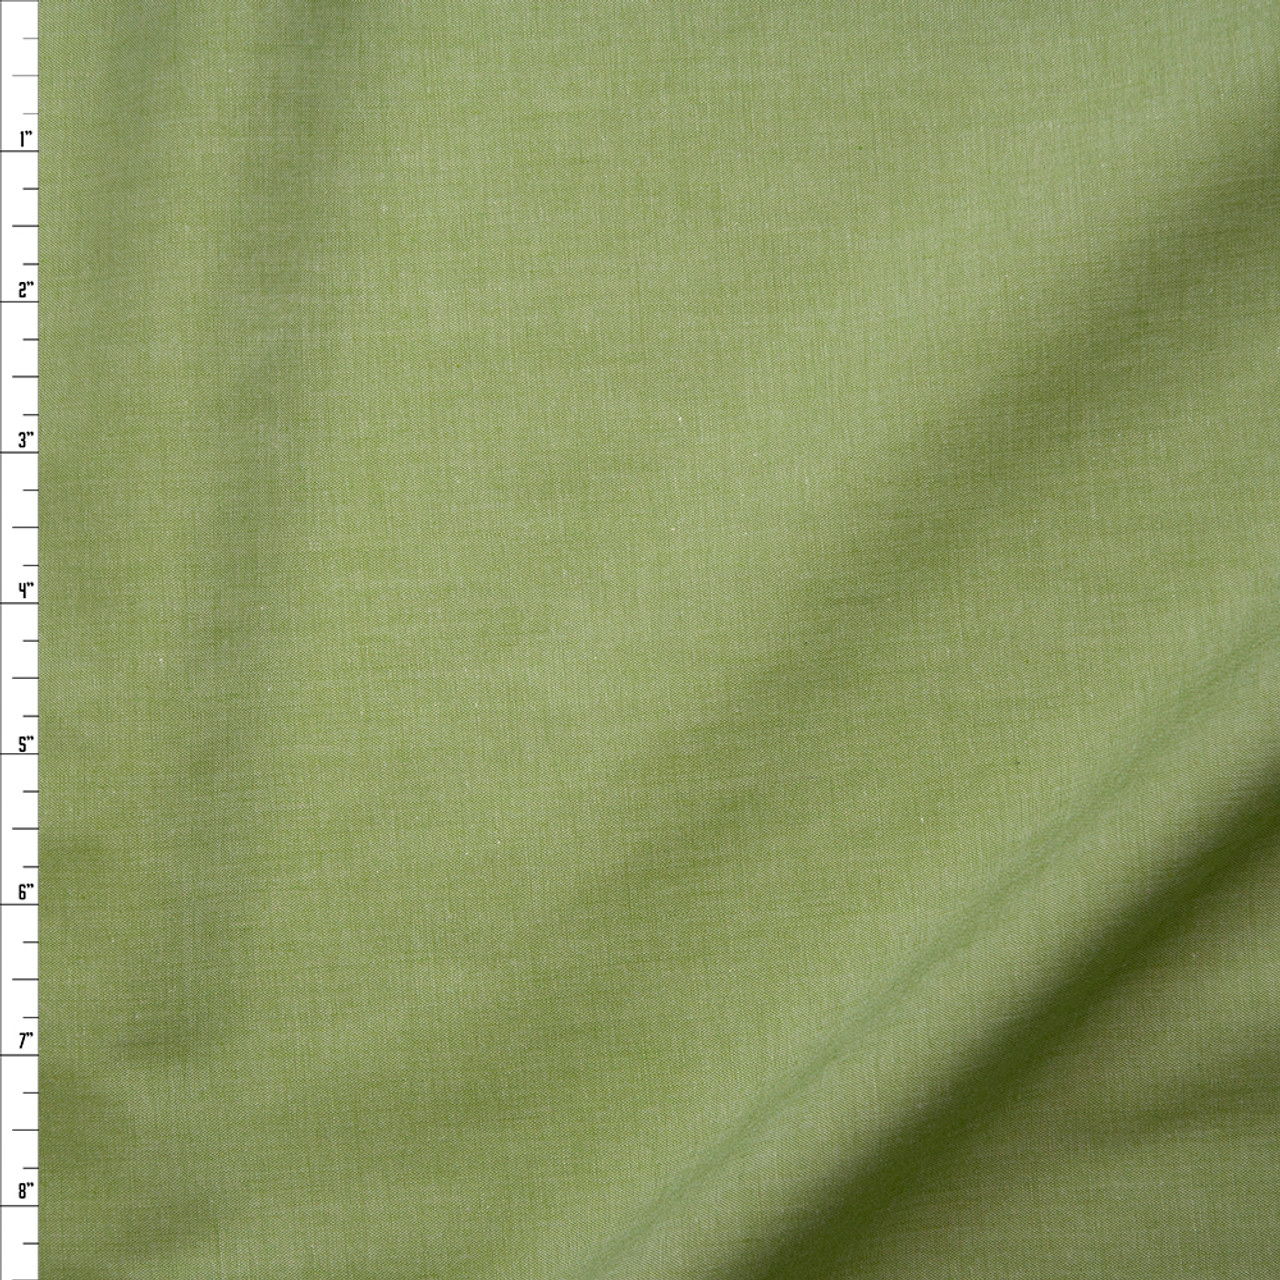 Cali Fabrics Avocado Green Lightweight Cotton Chambray Fabric by the Yard